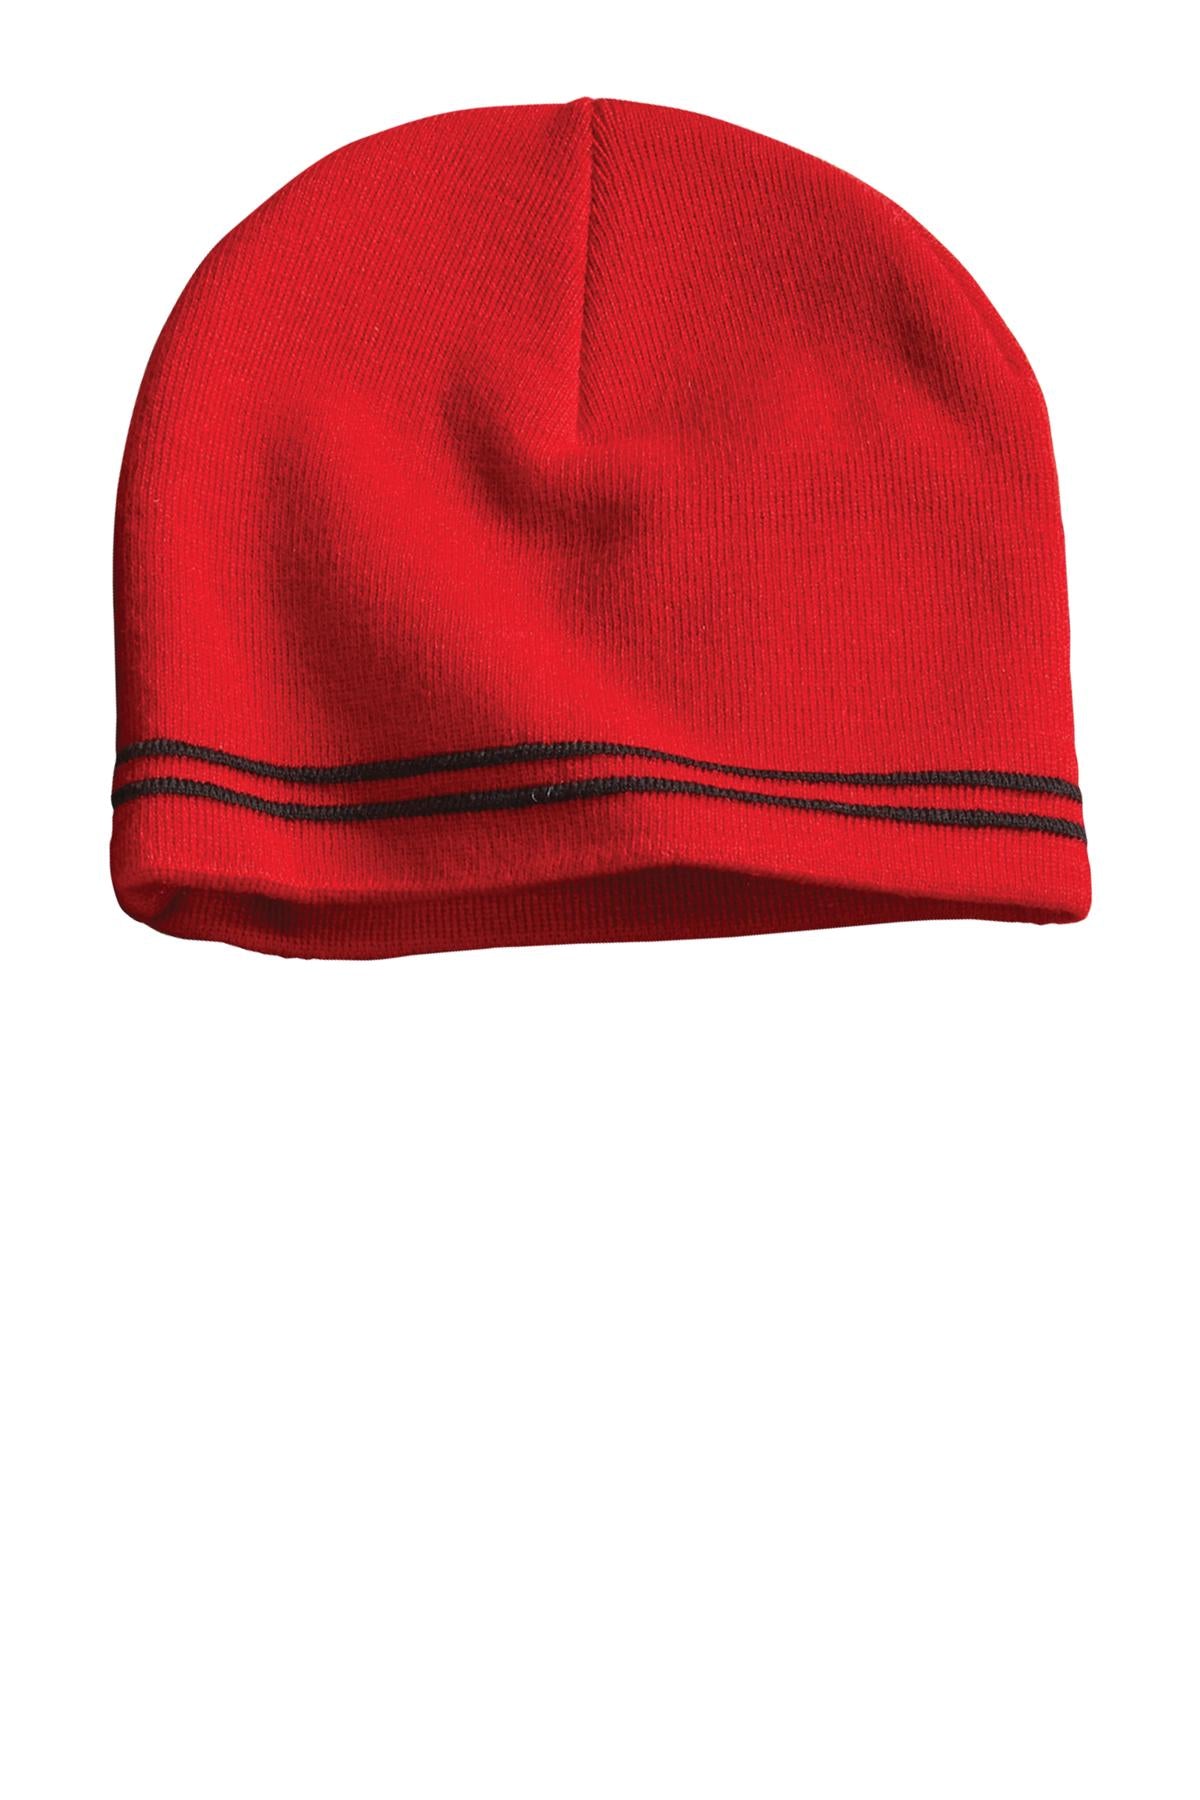 Caps True Red/ Black OSFA Sport-Tek